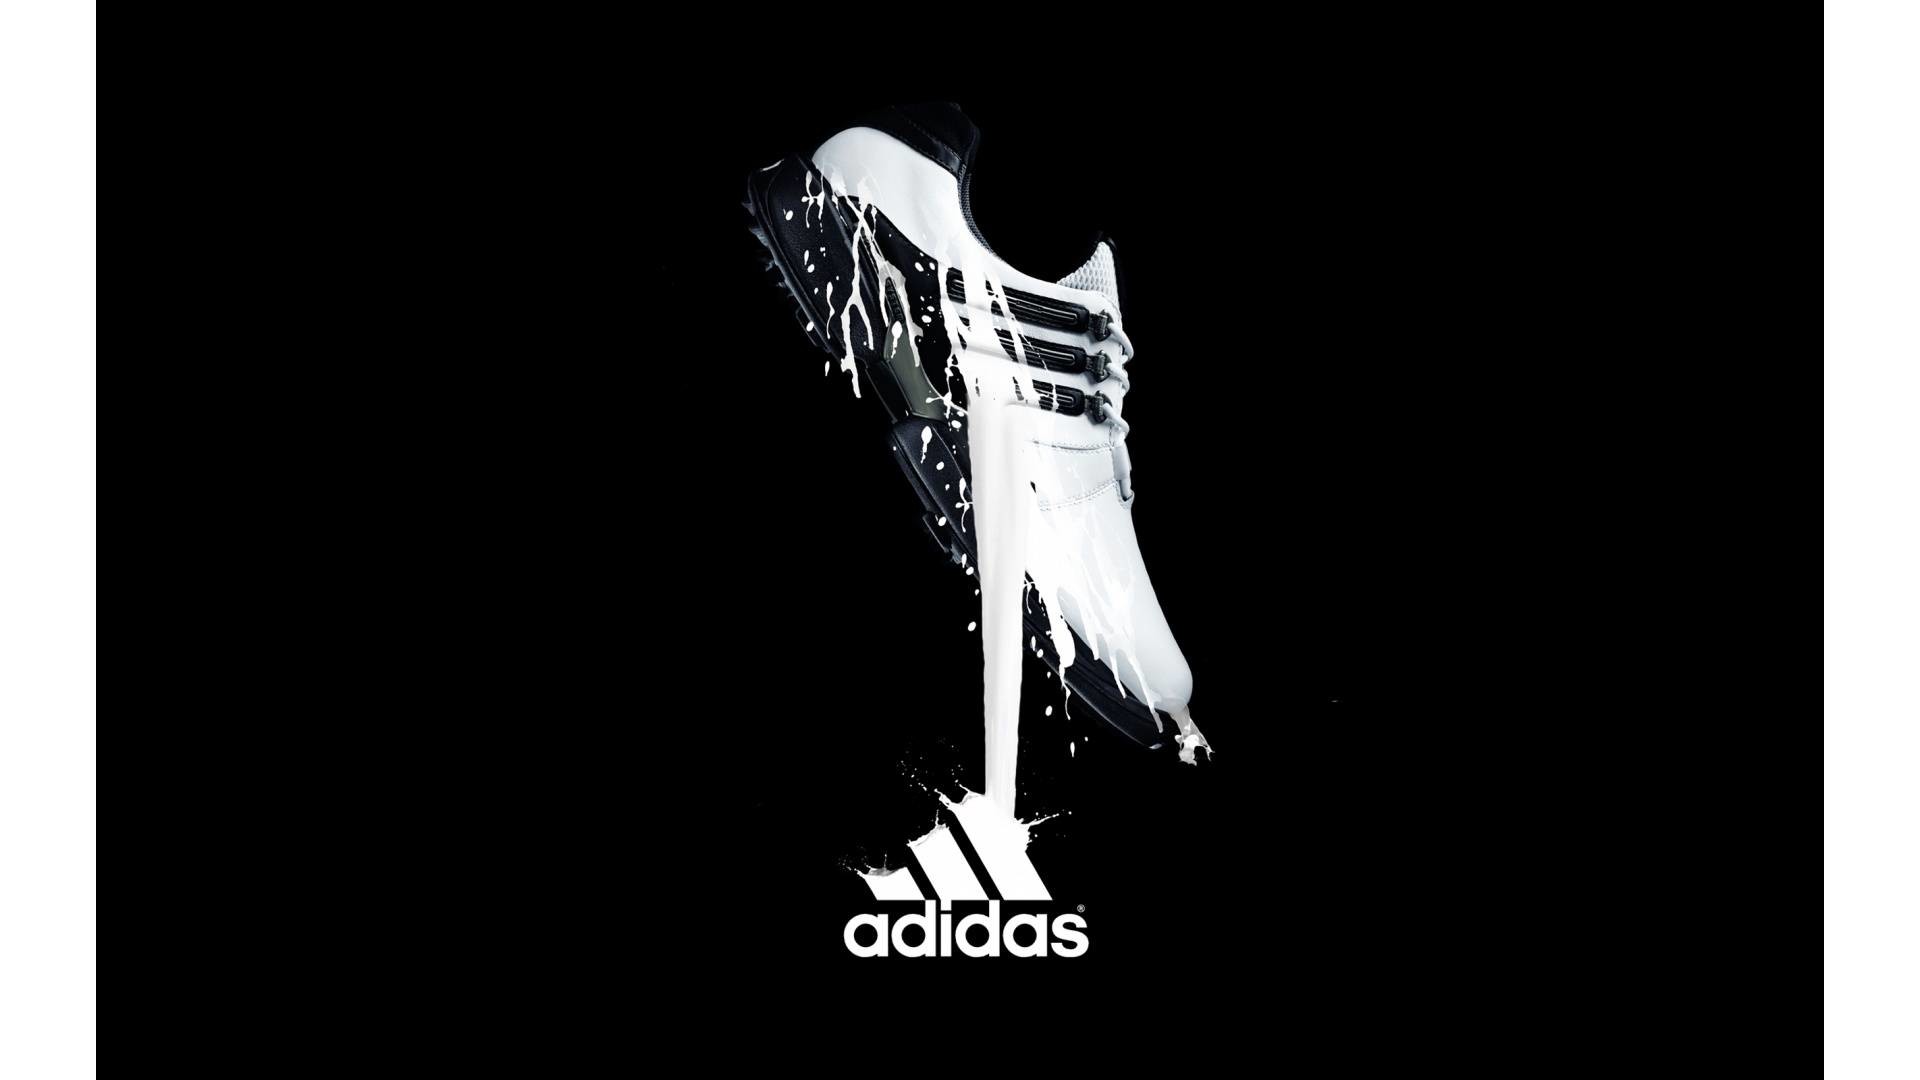 Adidas Wallpaper (76+ images)